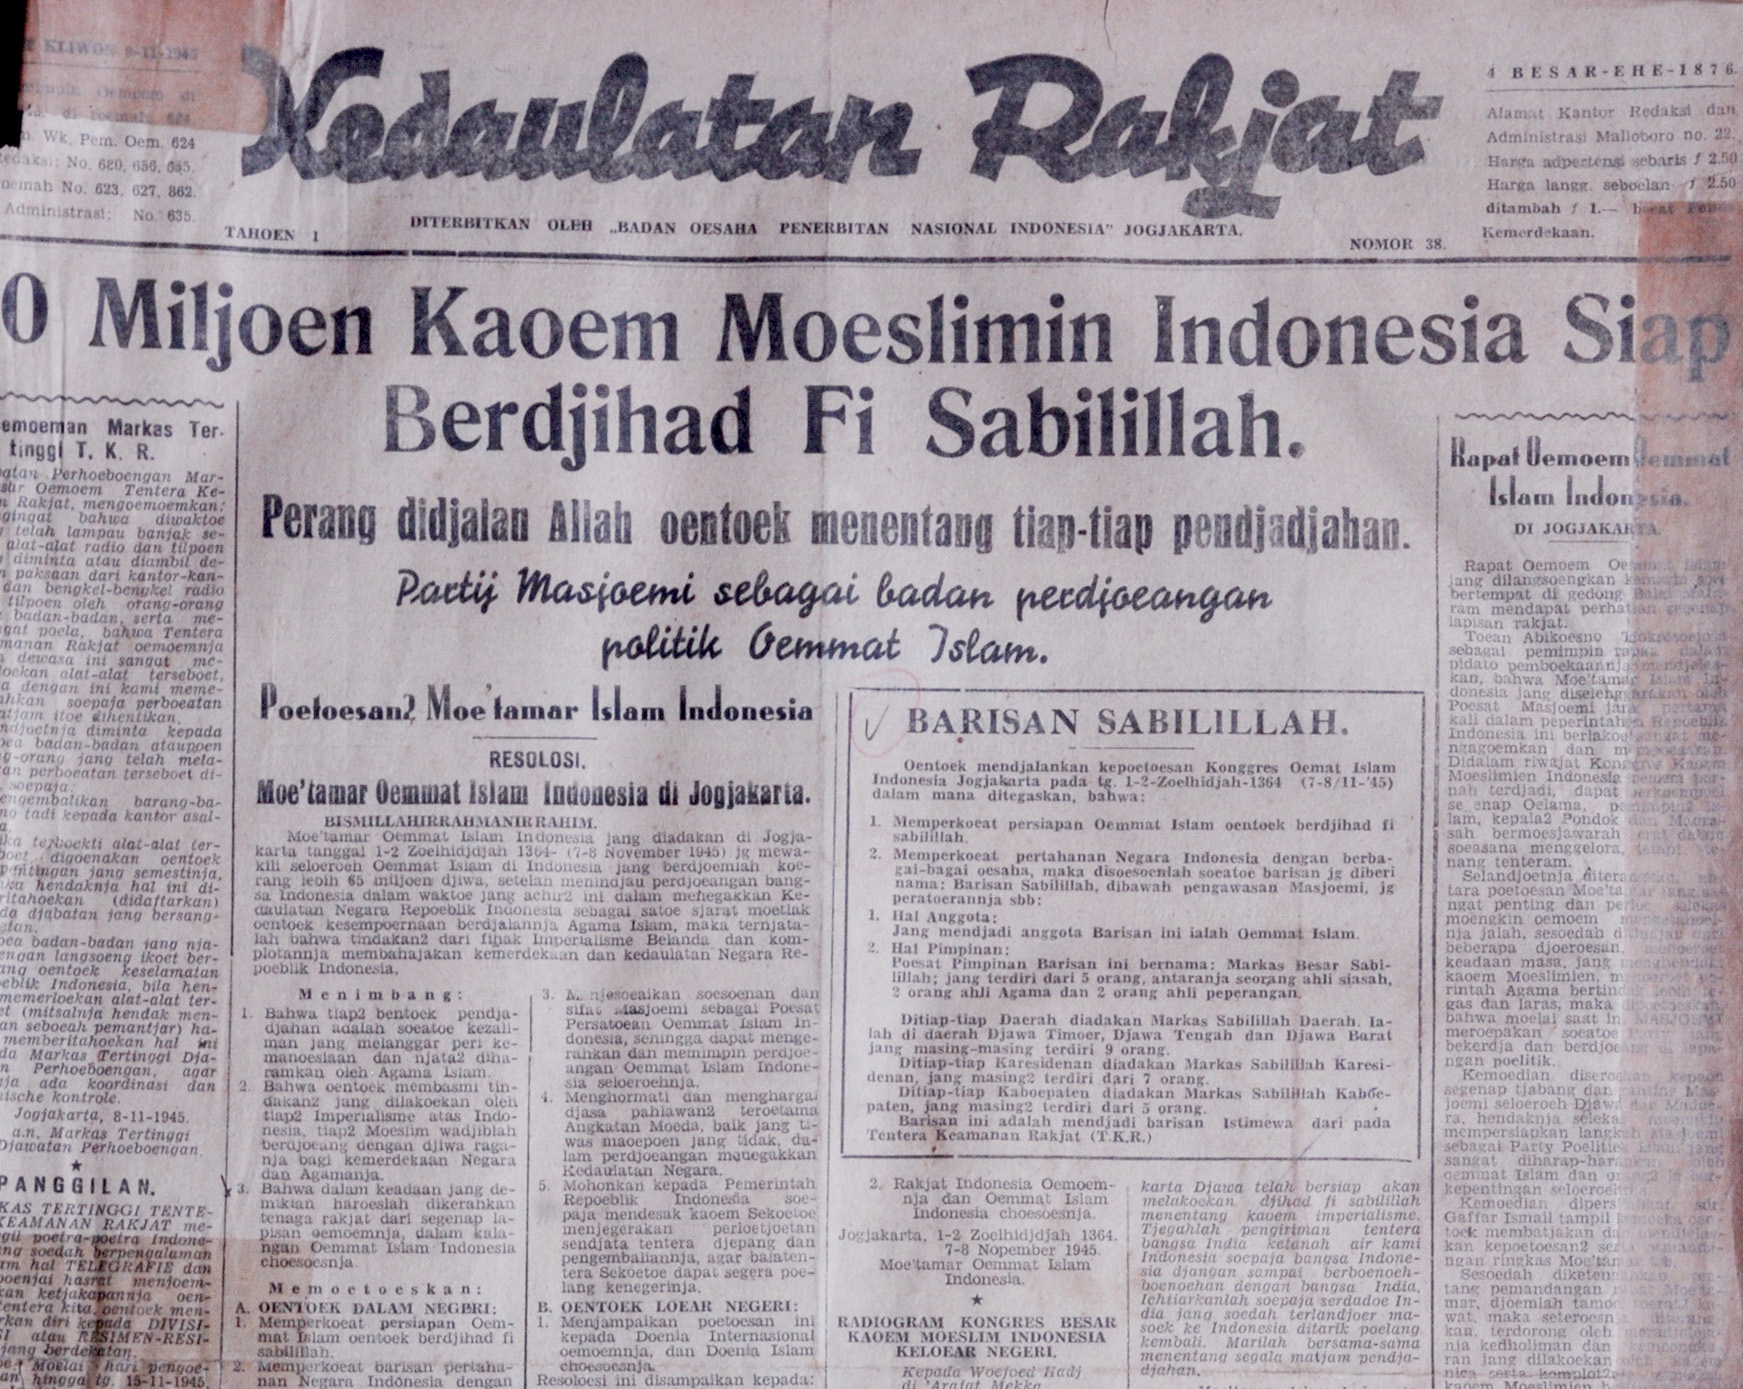 Resolusi jihad yang dikeluarkan pada tanggal 22 oktober 1945 dikeluarkan oleh